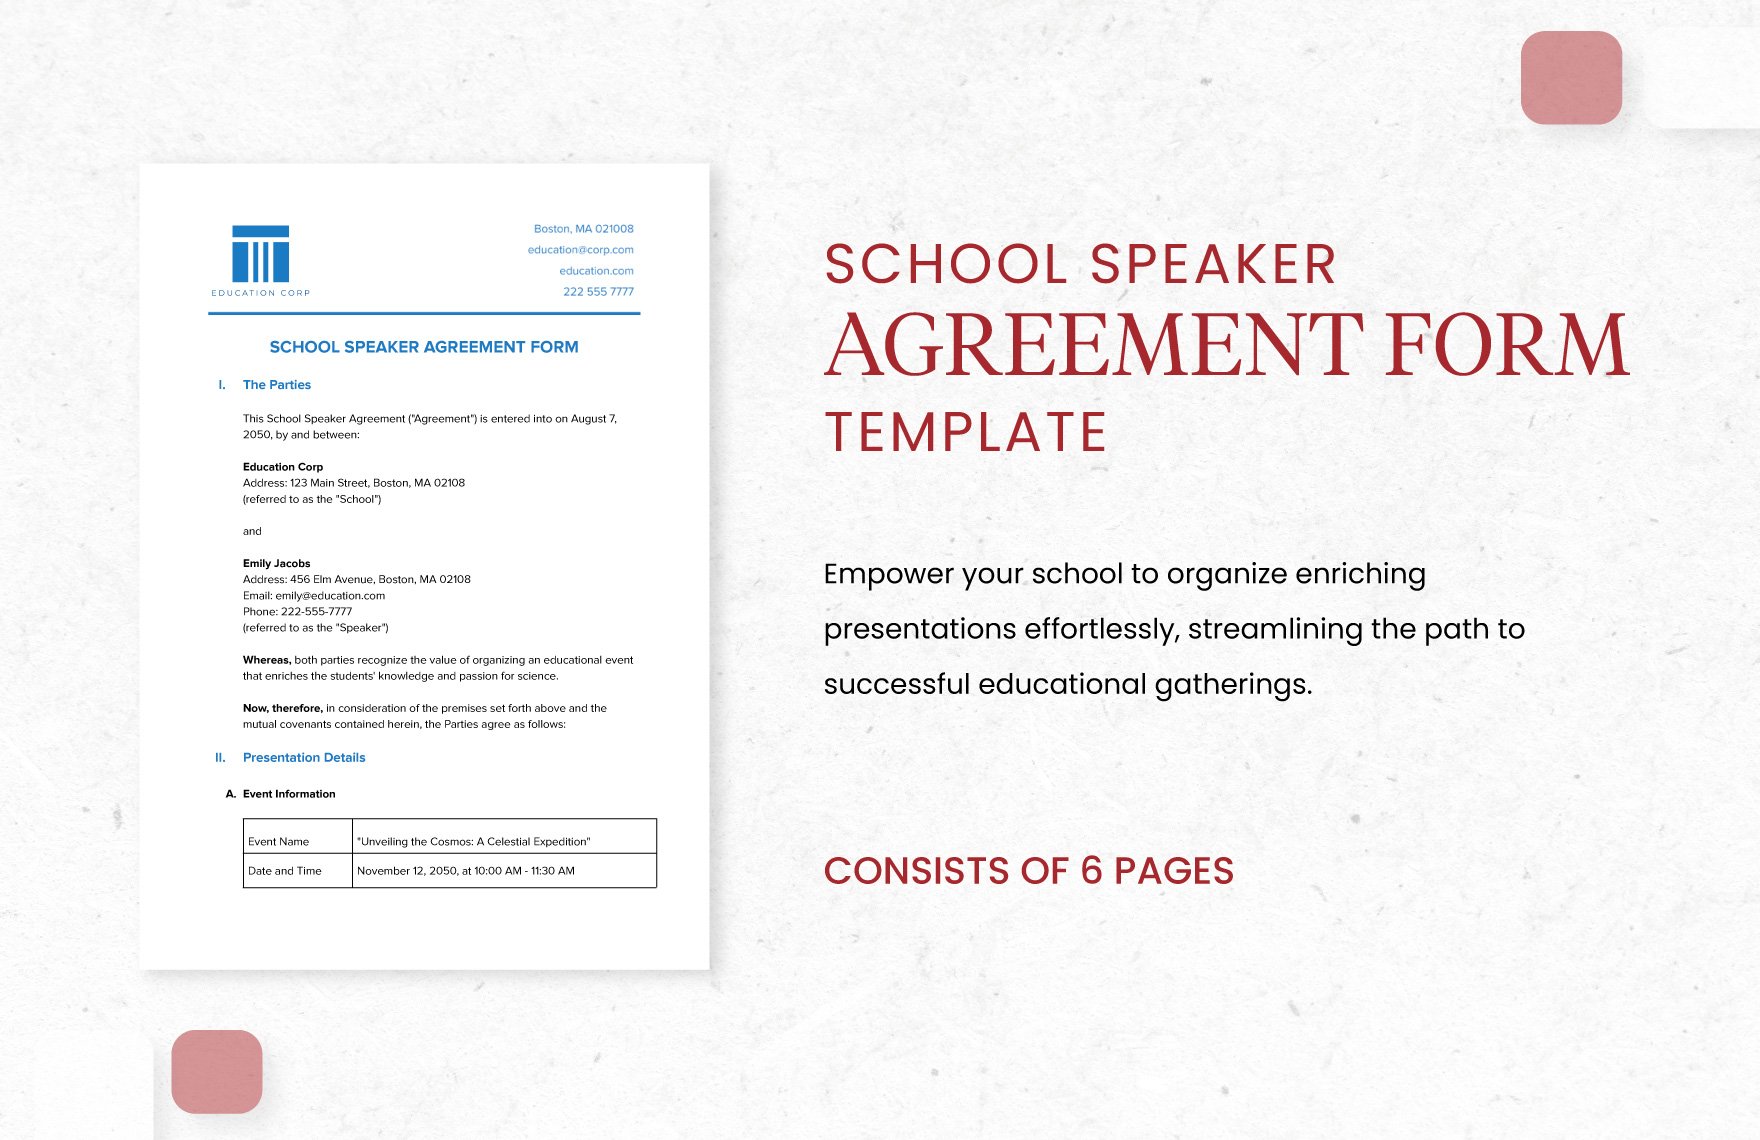 School Speaker Agreement Form Template